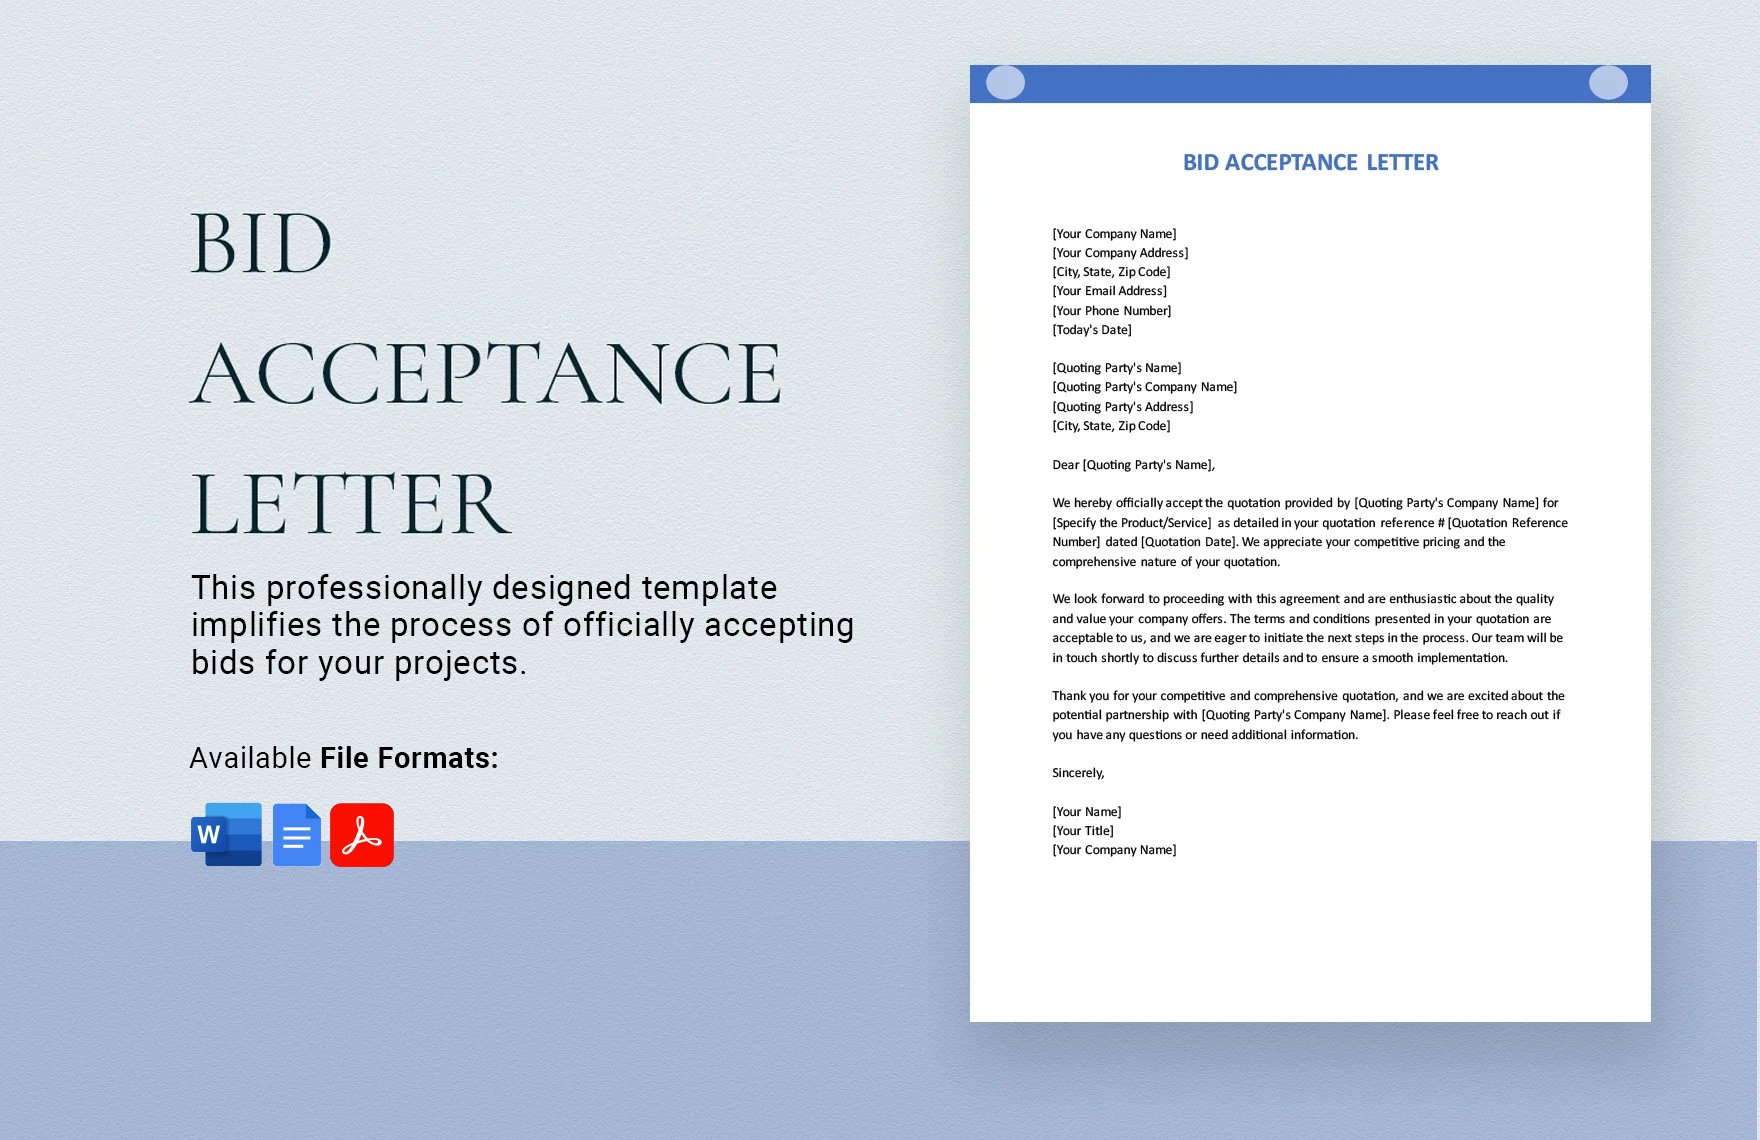 Bid Acceptance Letter in Word, Google Docs, PDF